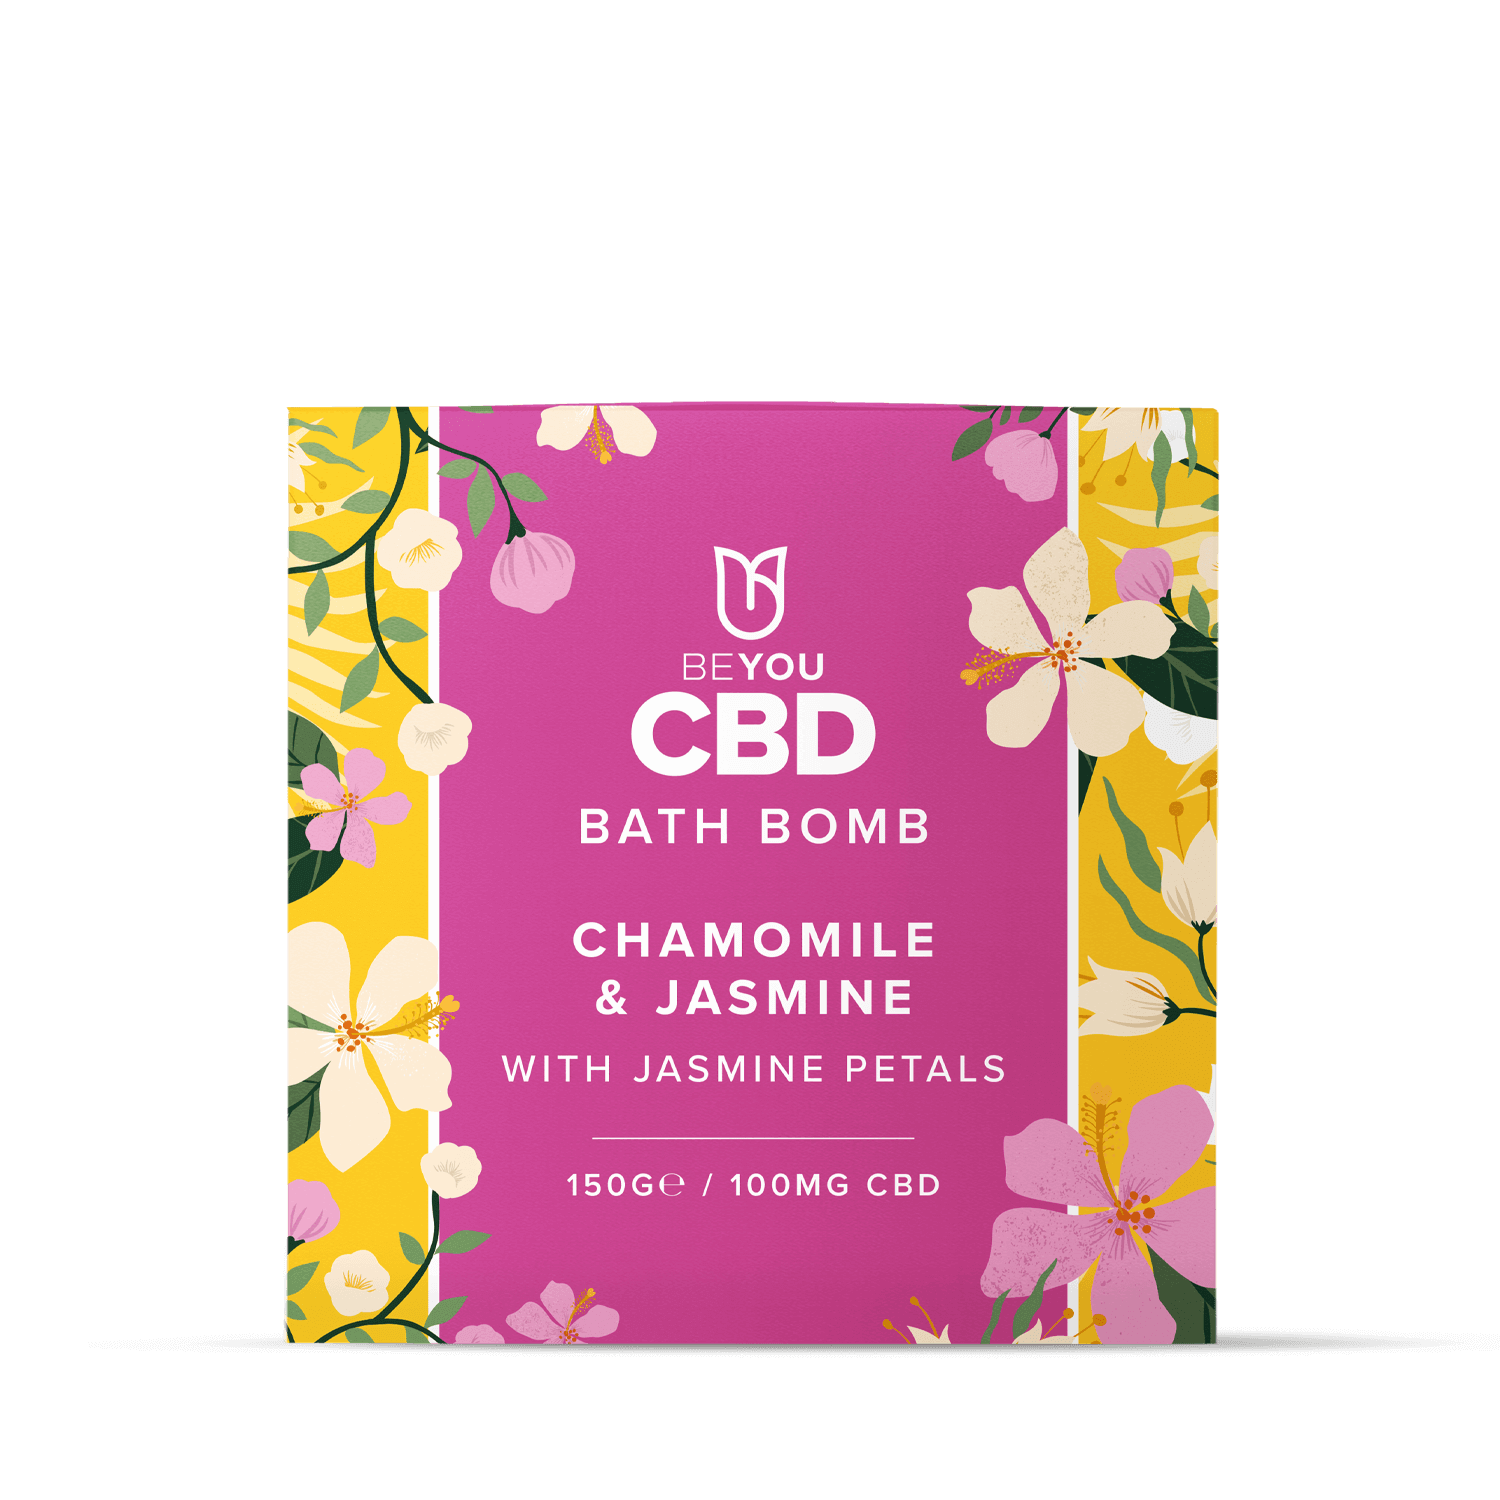 BeYou CBD Bath Bomb - Chamomile & Jasmine with Jasmine petals Best Price